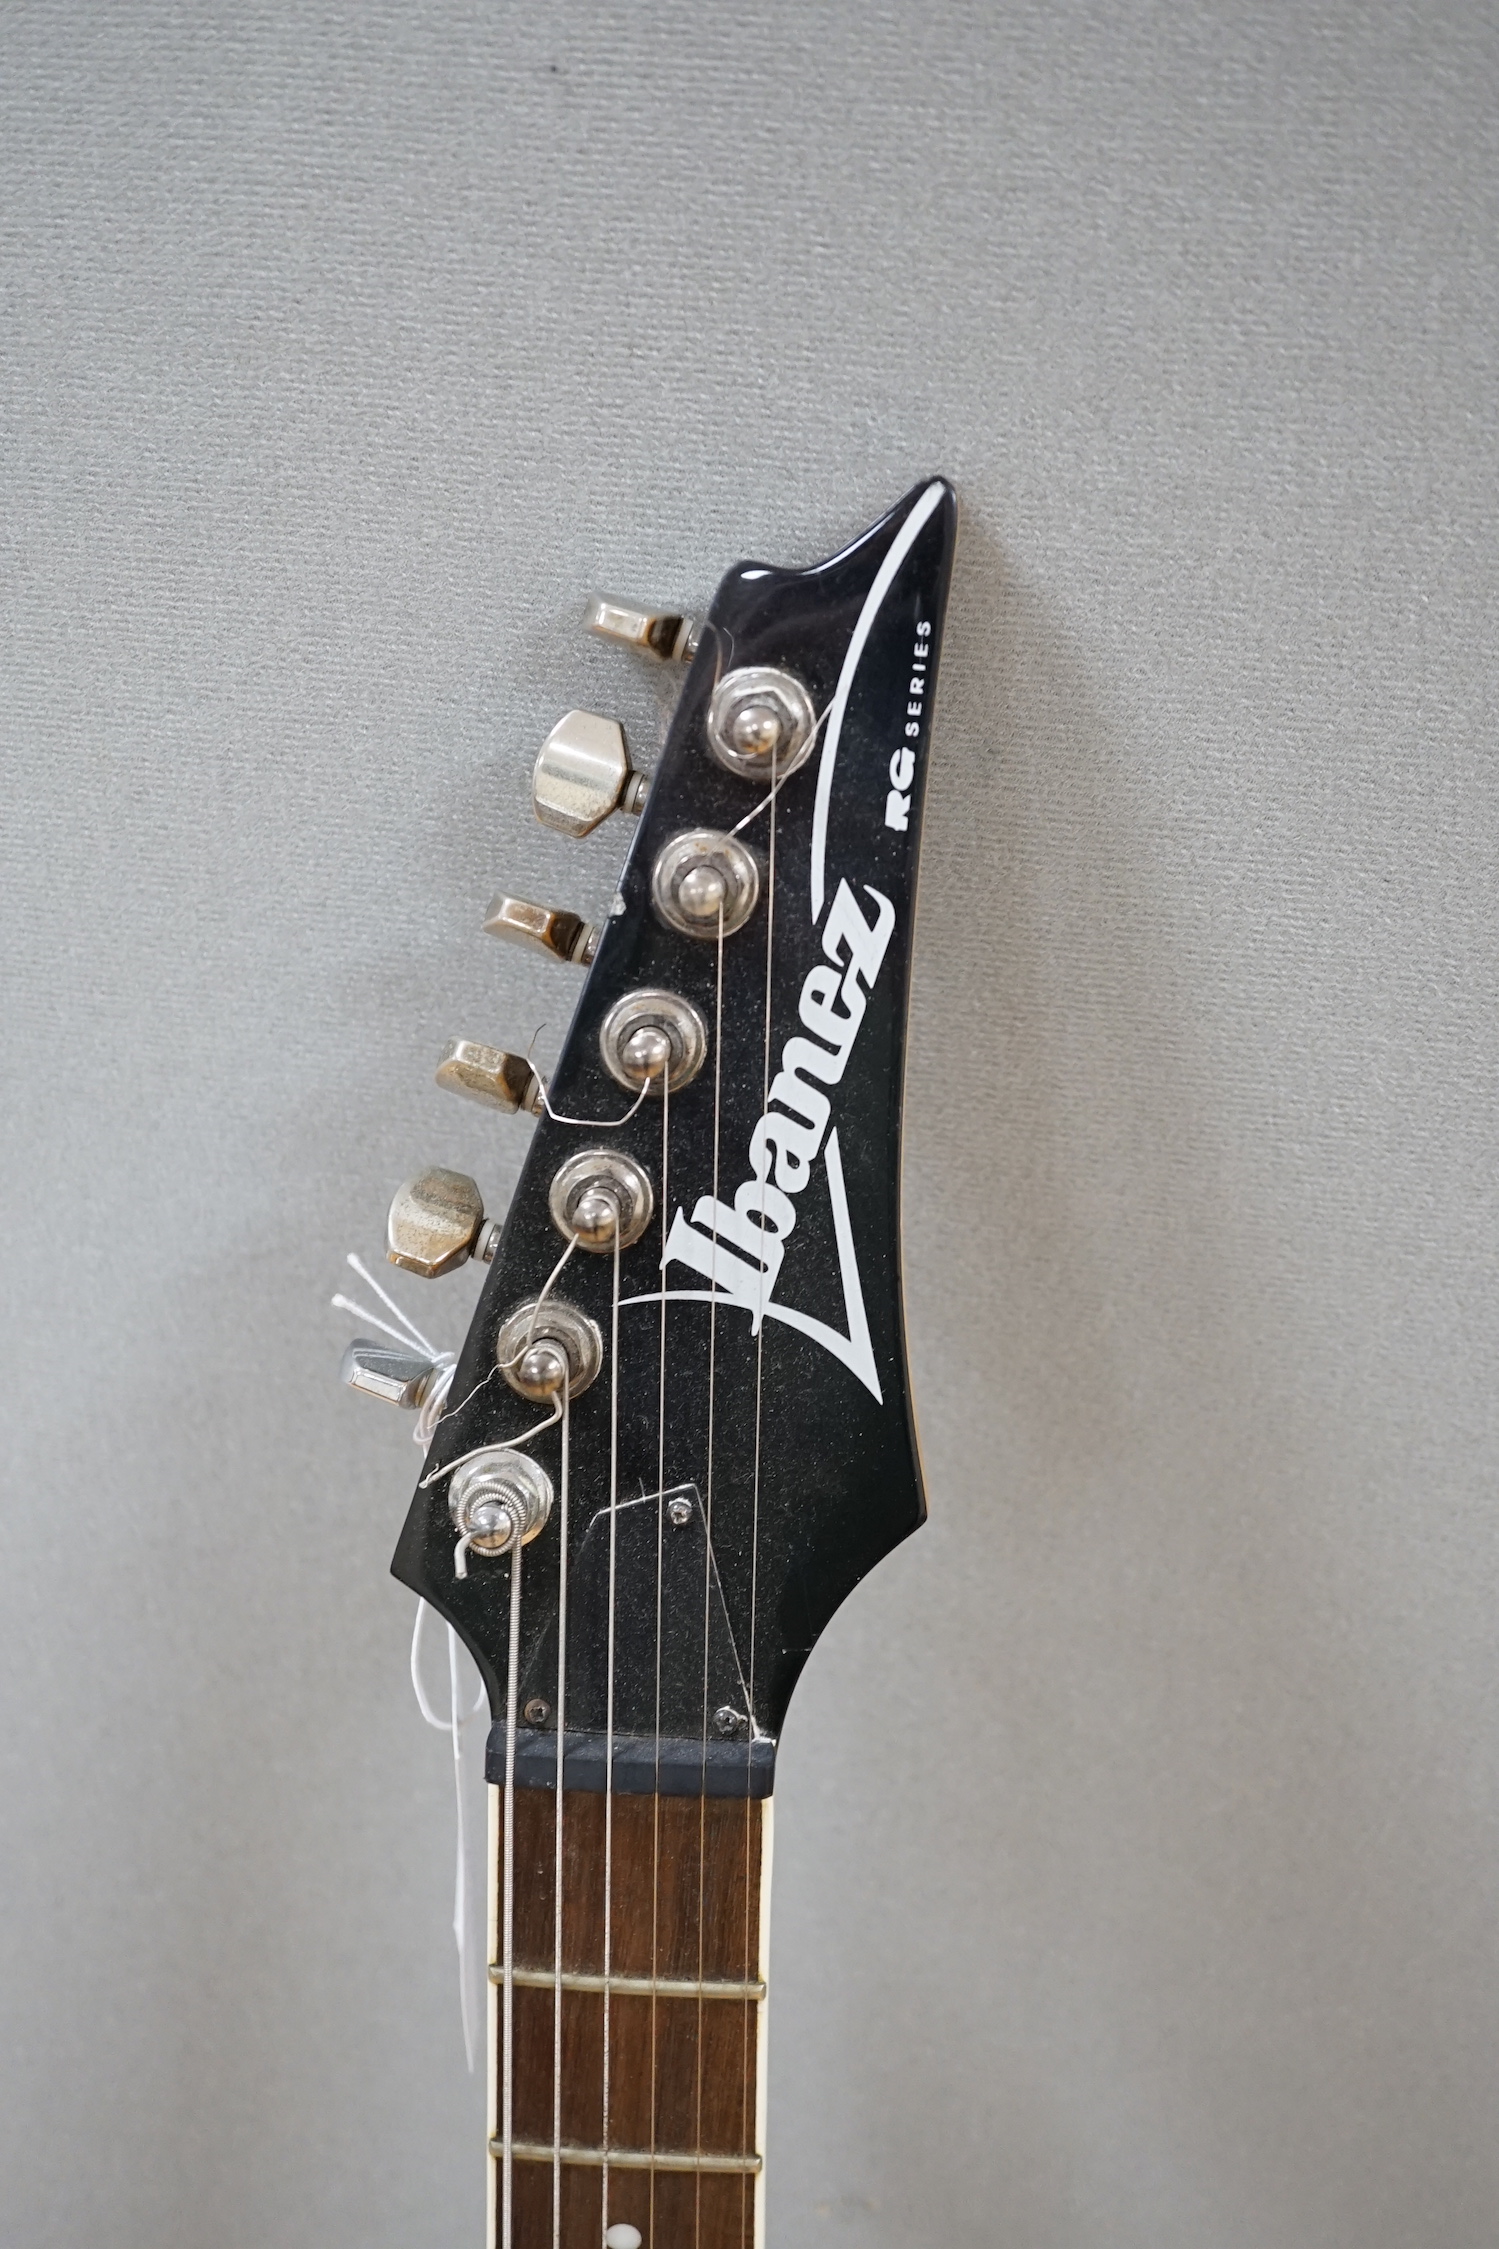 An Ibanez RG series electric guitar